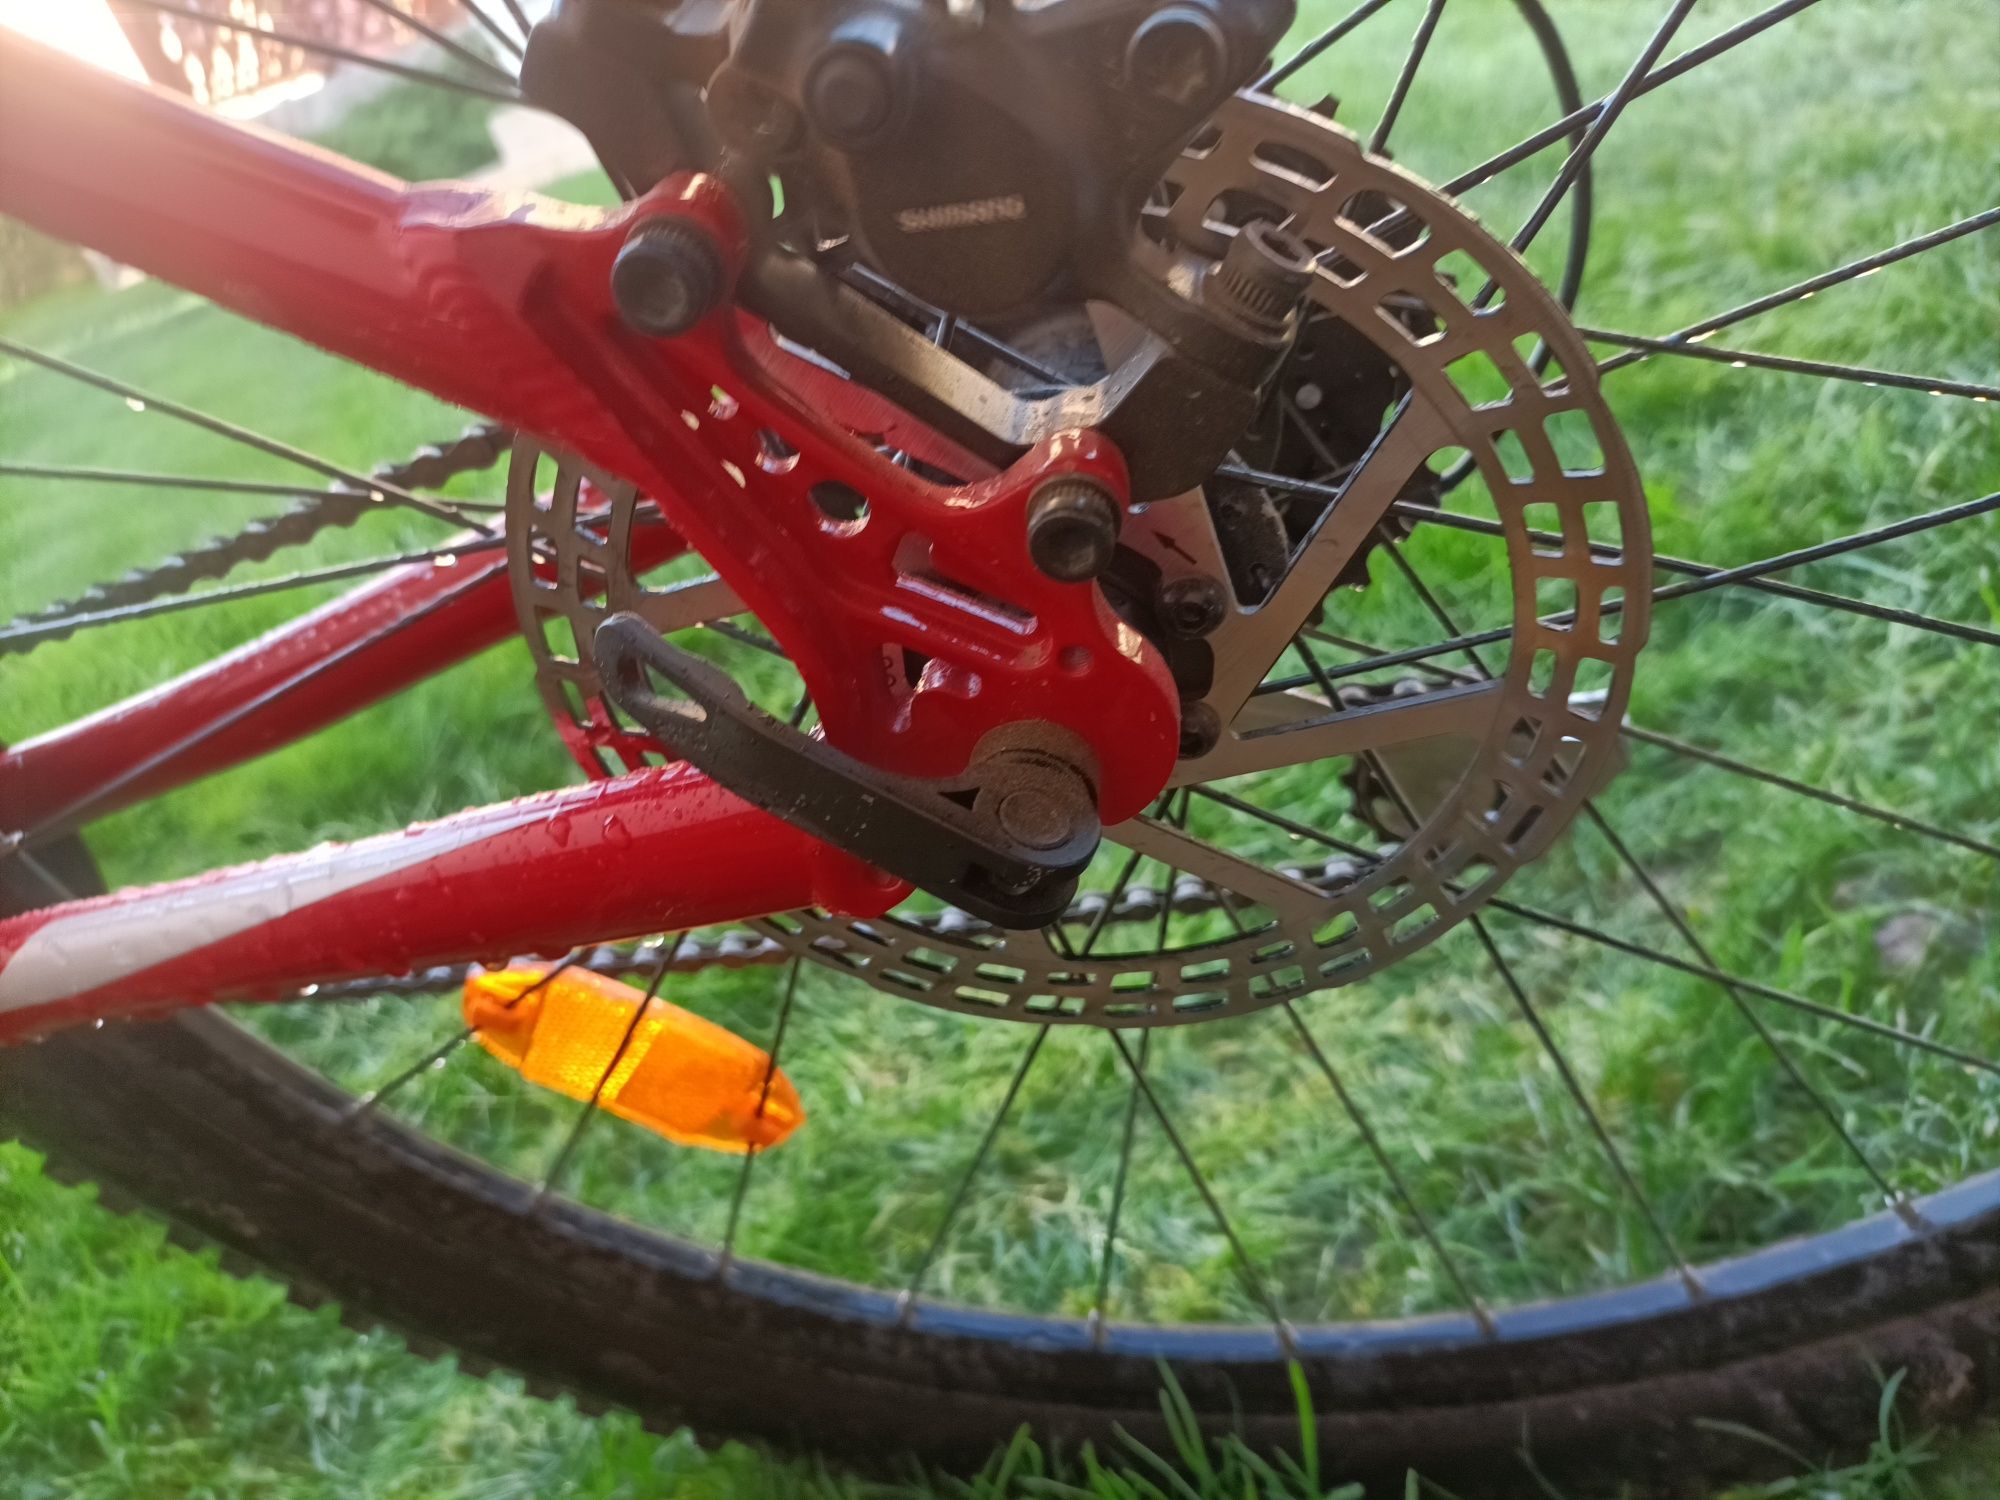 Vând kross hexagon 5.0 sau fac schimb cu Dirt bike